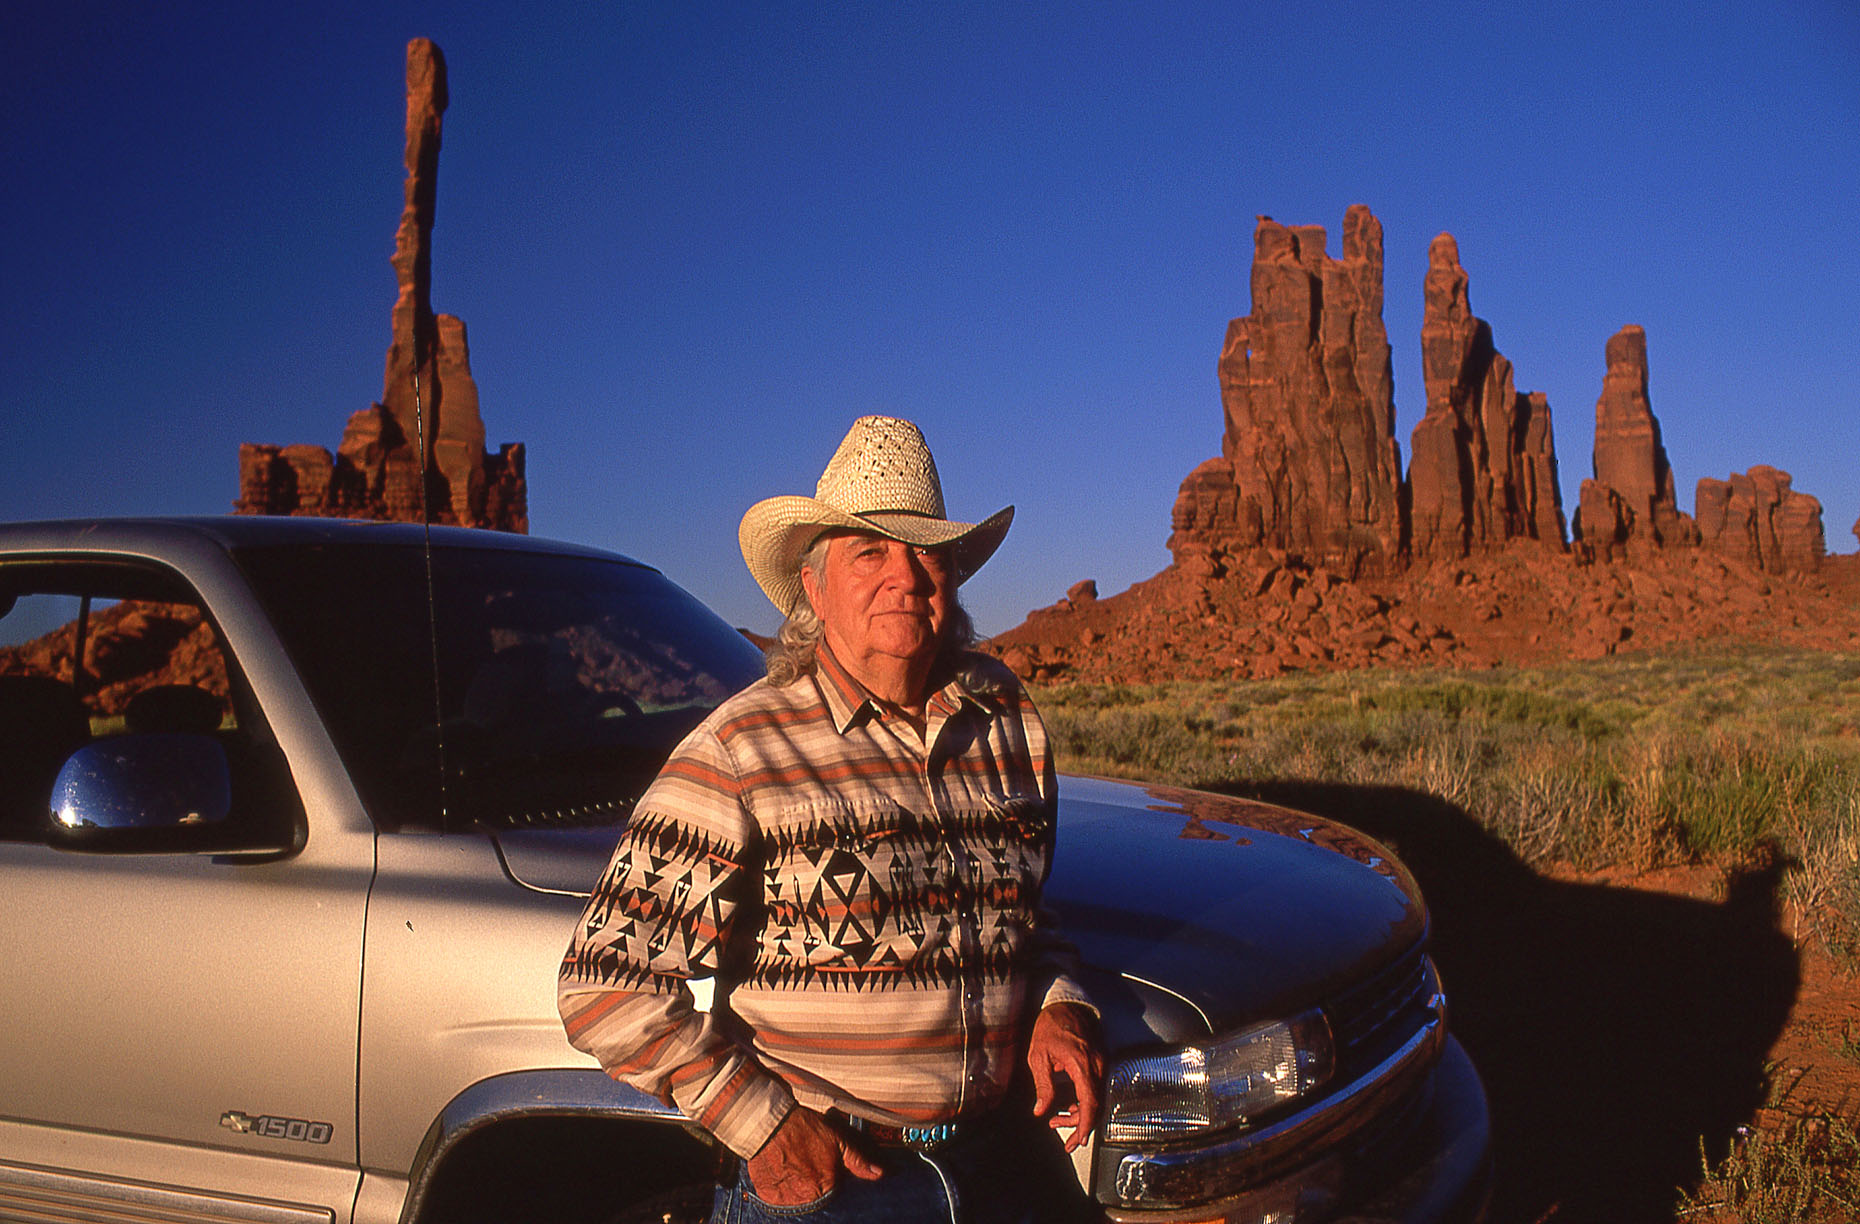 Bill Crawley, John Annerino, Native American traditions, Totem Pole, Yéi Becheii spires, Monument Valley Navajo Tribal Park, Arizona-Utah